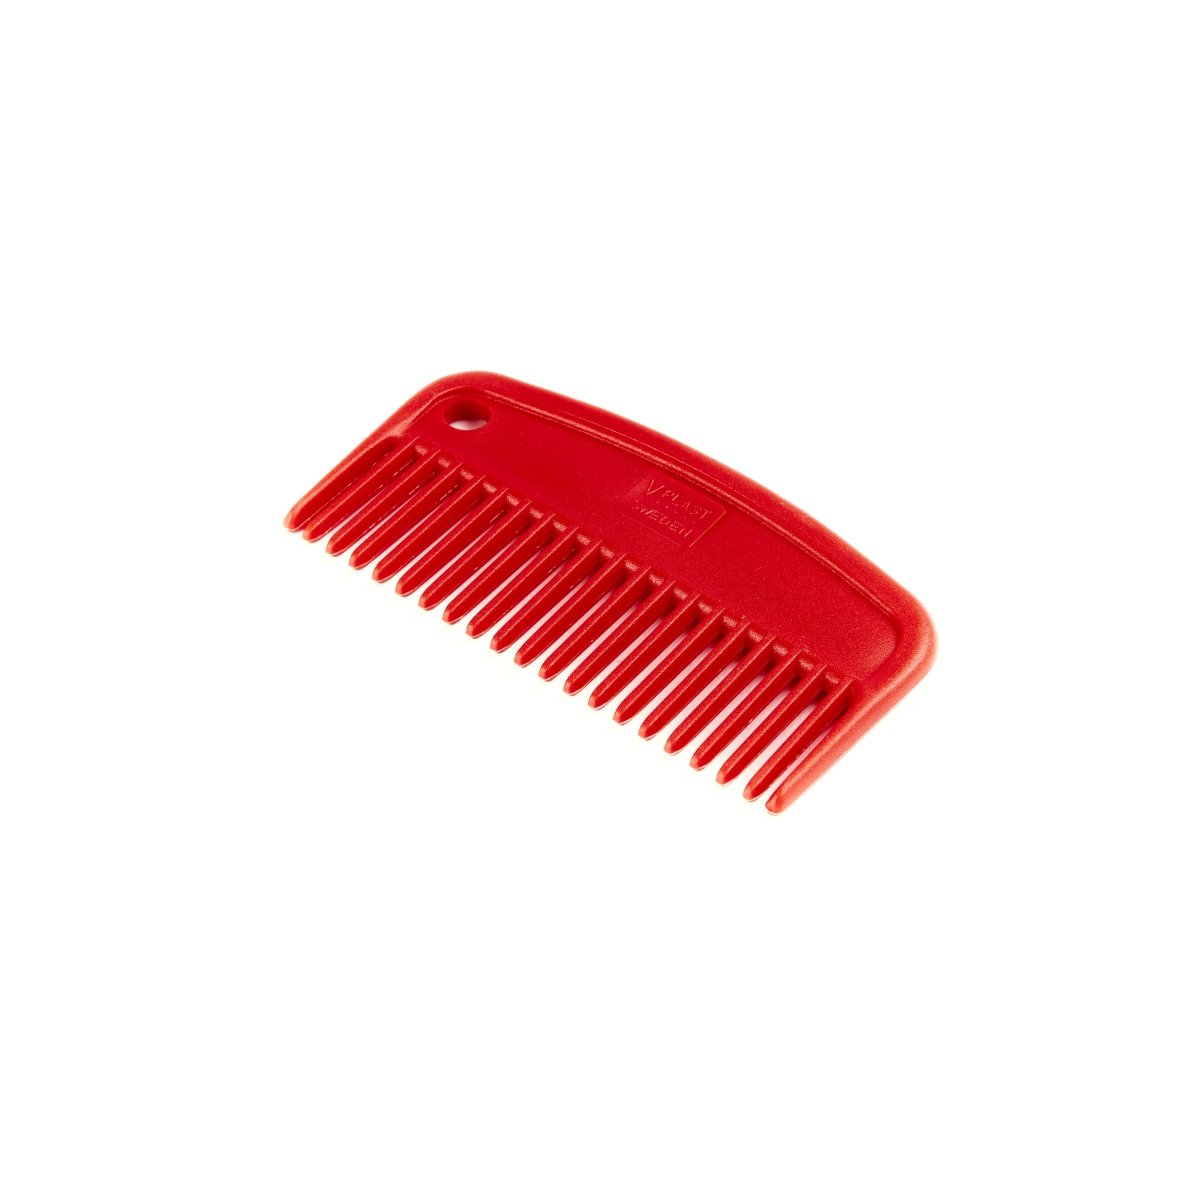 EZI-GROOM Plastic Mane Comb - Red -